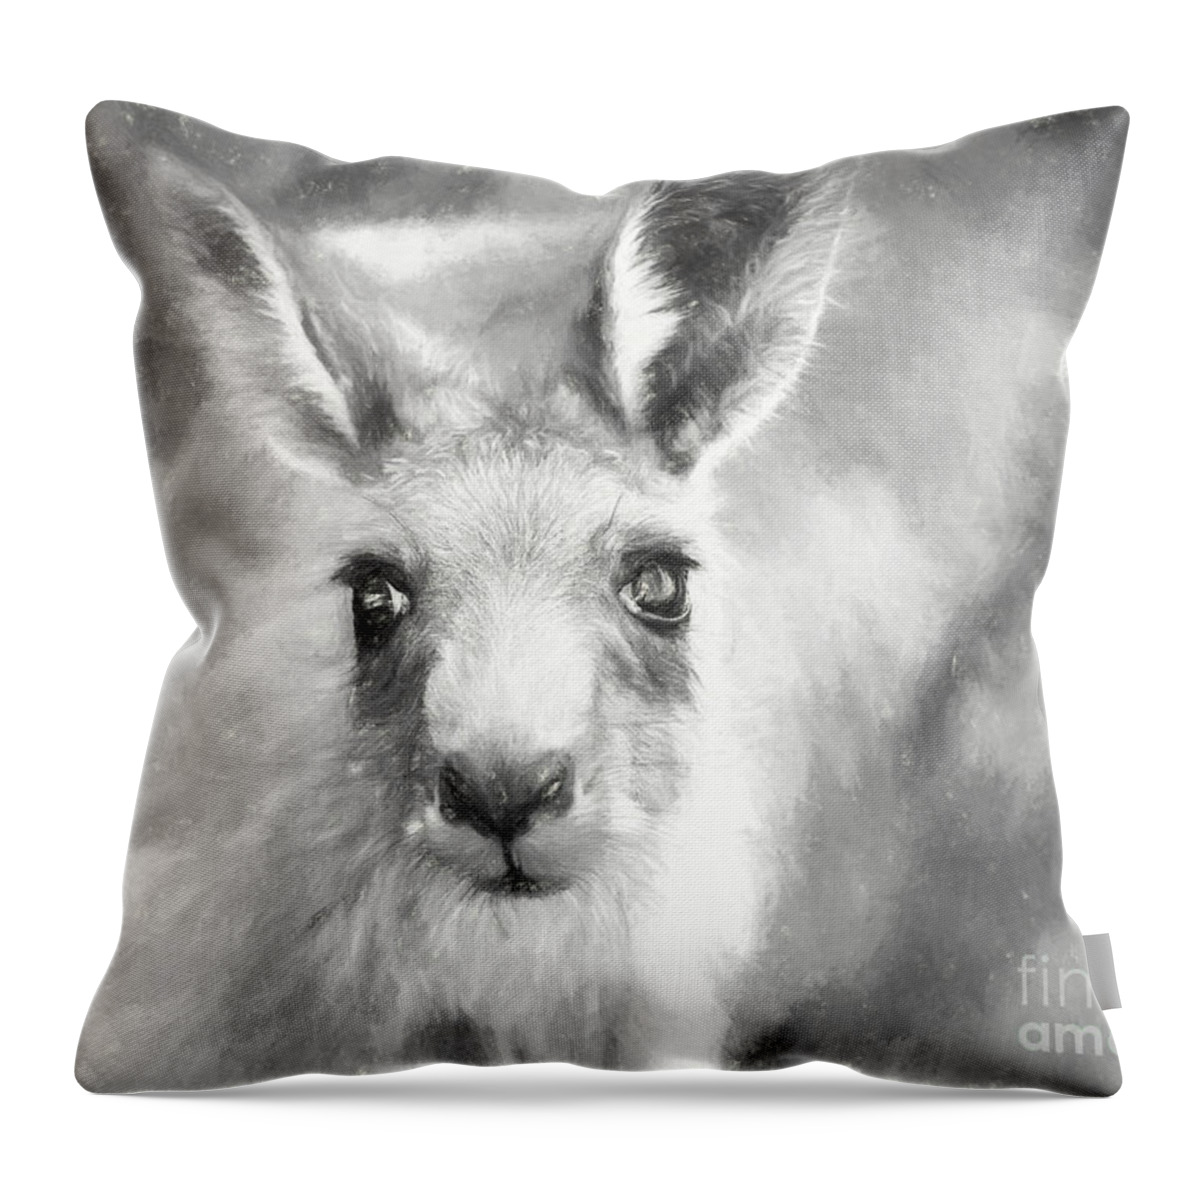 Eastern Grey Kangaroo Throw Pillow featuring the photograph Eastern grey kangaroo by Sheila Smart Fine Art Photography